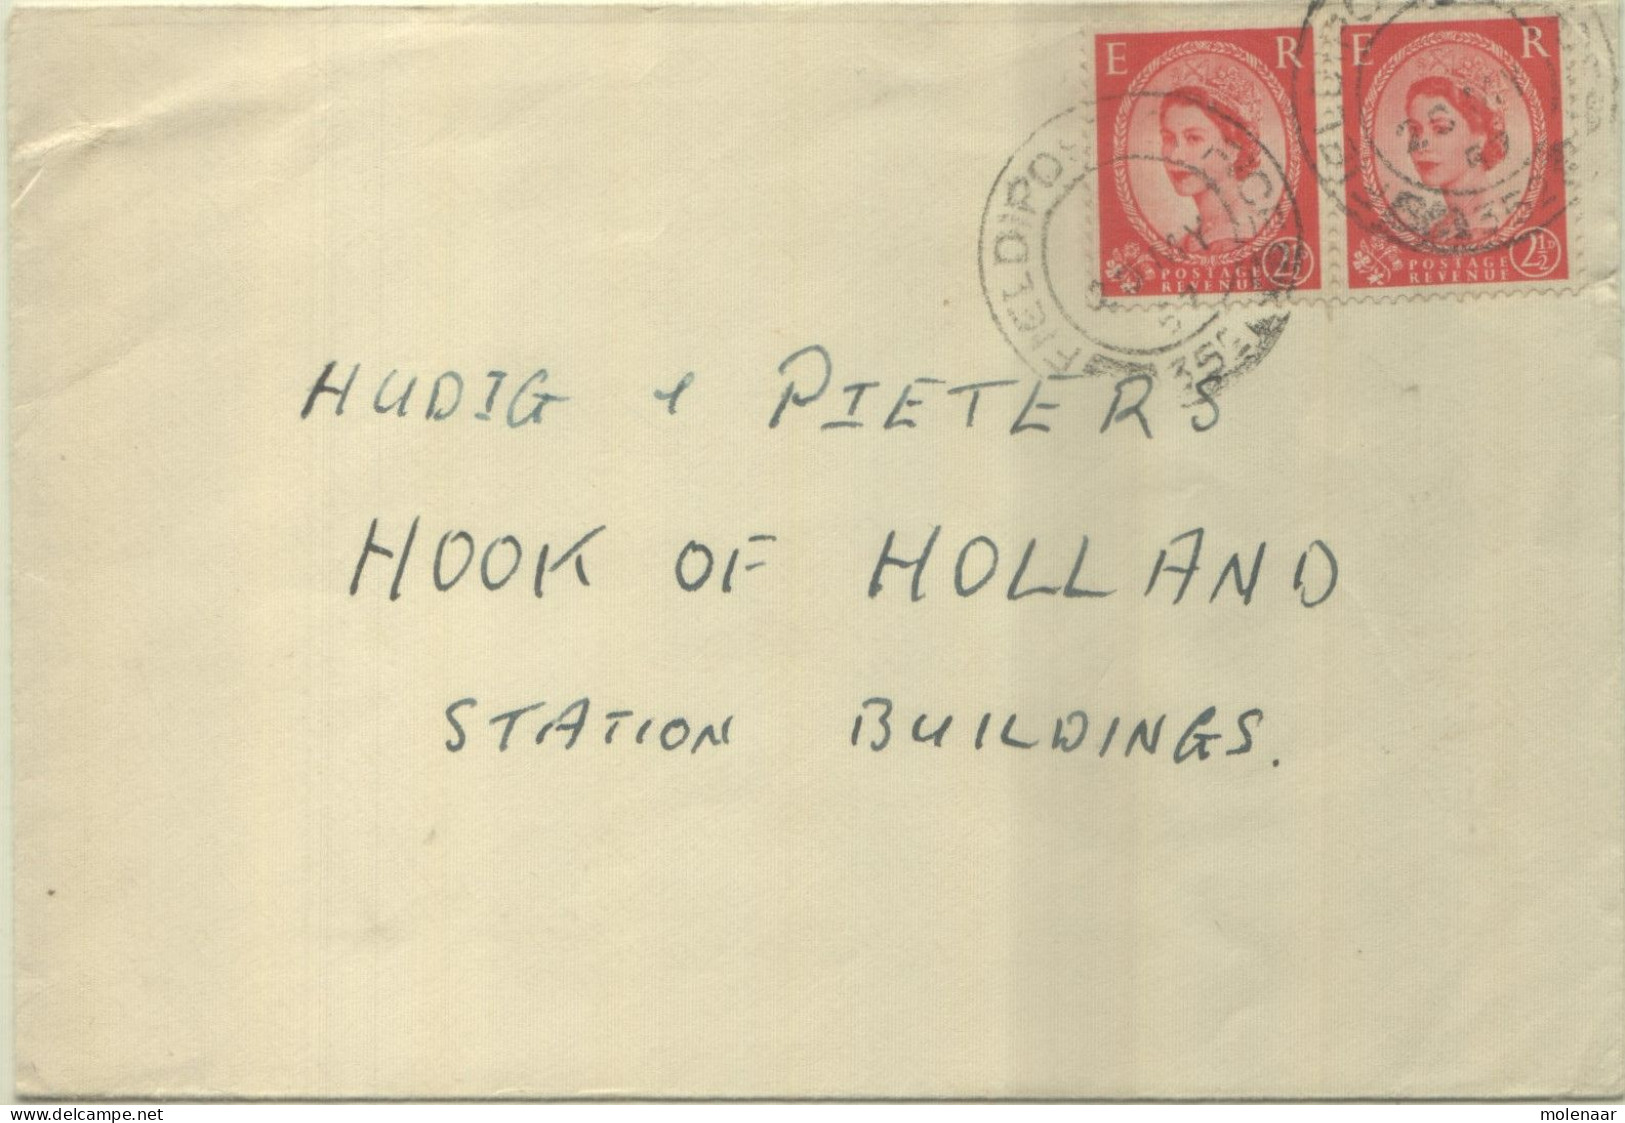 Postzegels > Europa > Groot-Brittannië > 1952-2022 Elizabeth II > 1971-1980  > Brief Met 2 Postzegels (16818) - Briefe U. Dokumente